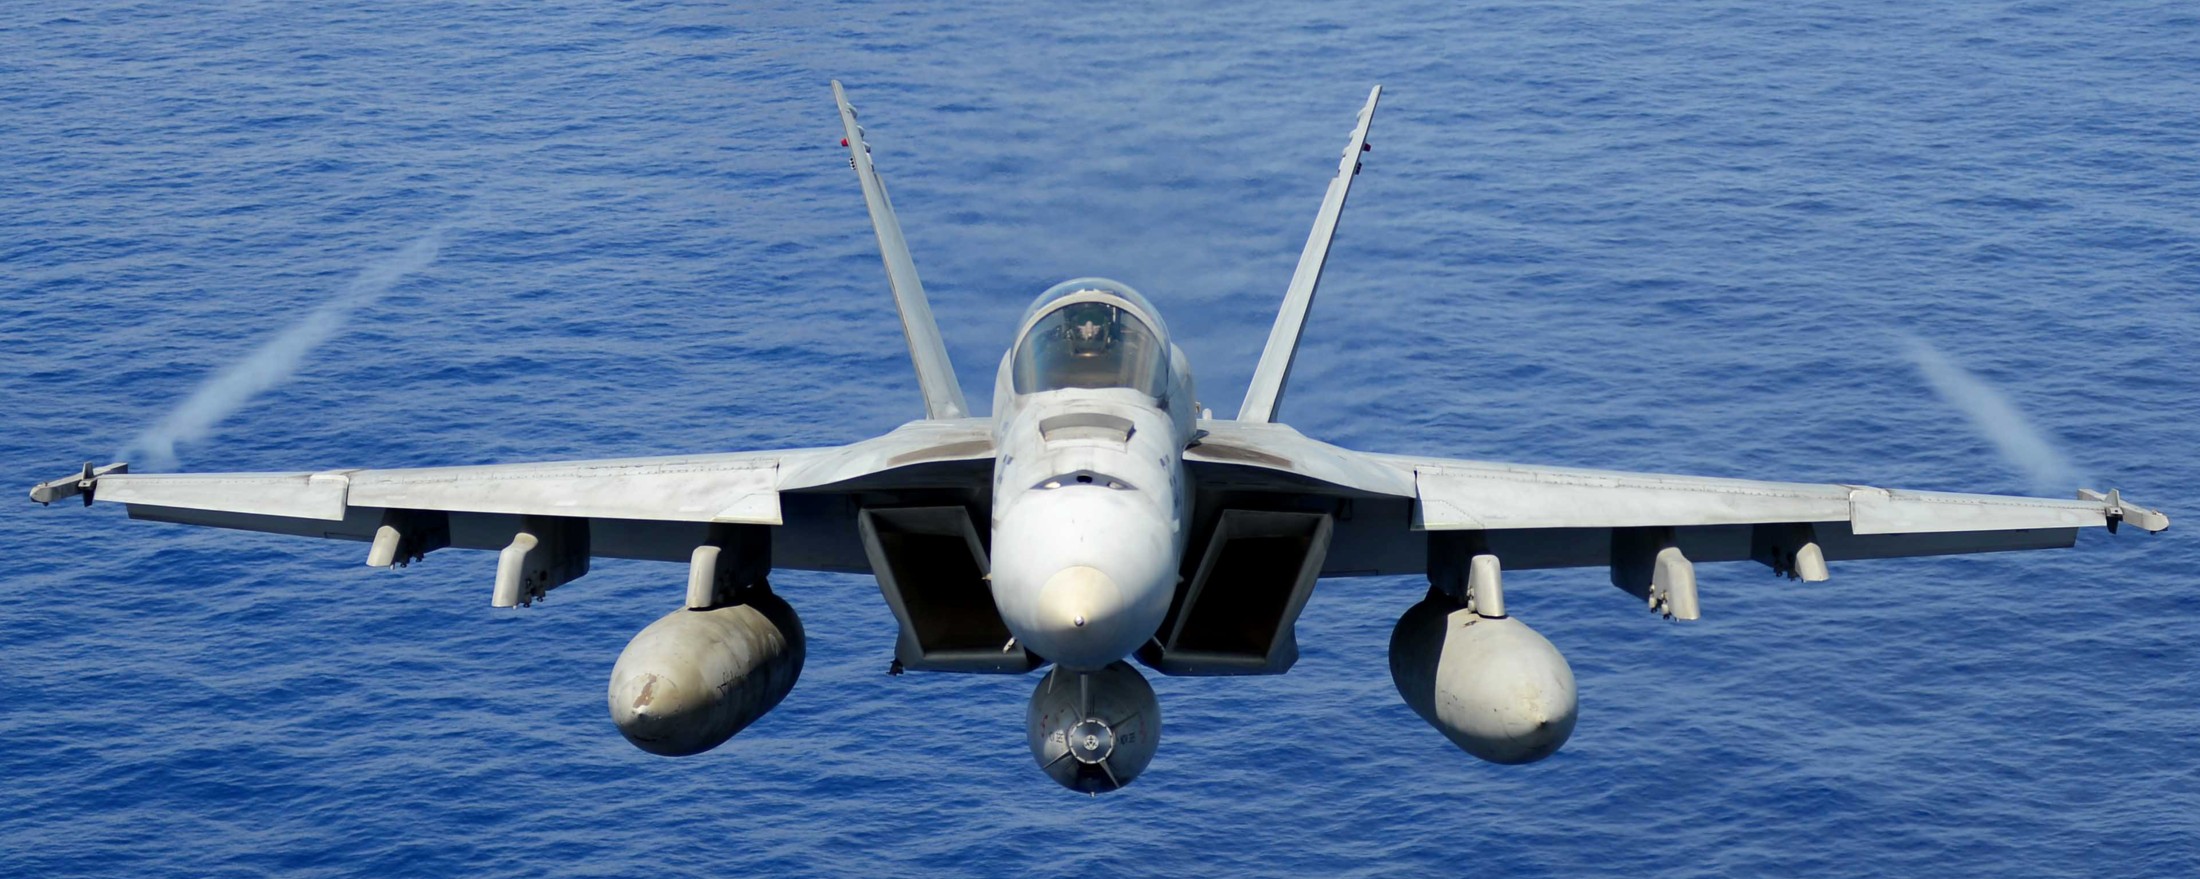 vfa-14 tophatters strike fighter squadron f/a-18e super hornet cvn-74 uss john c. stennis cvw-9 us navy 38